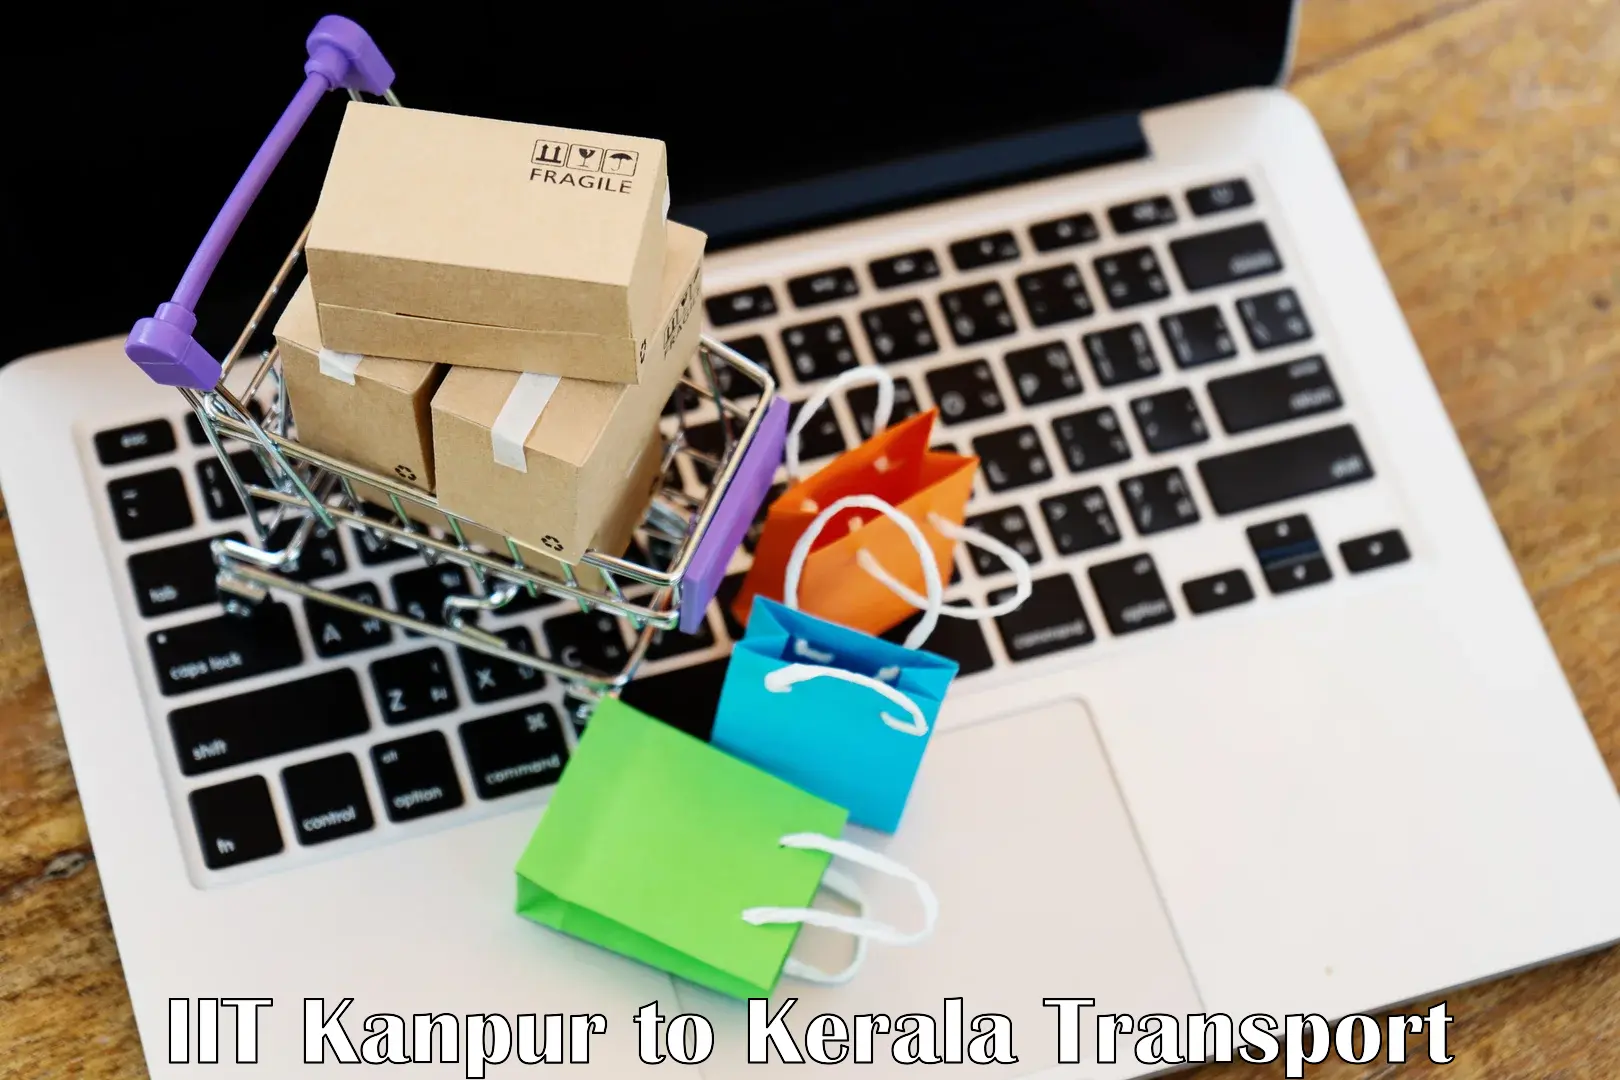 Intercity transport IIT Kanpur to Kochi